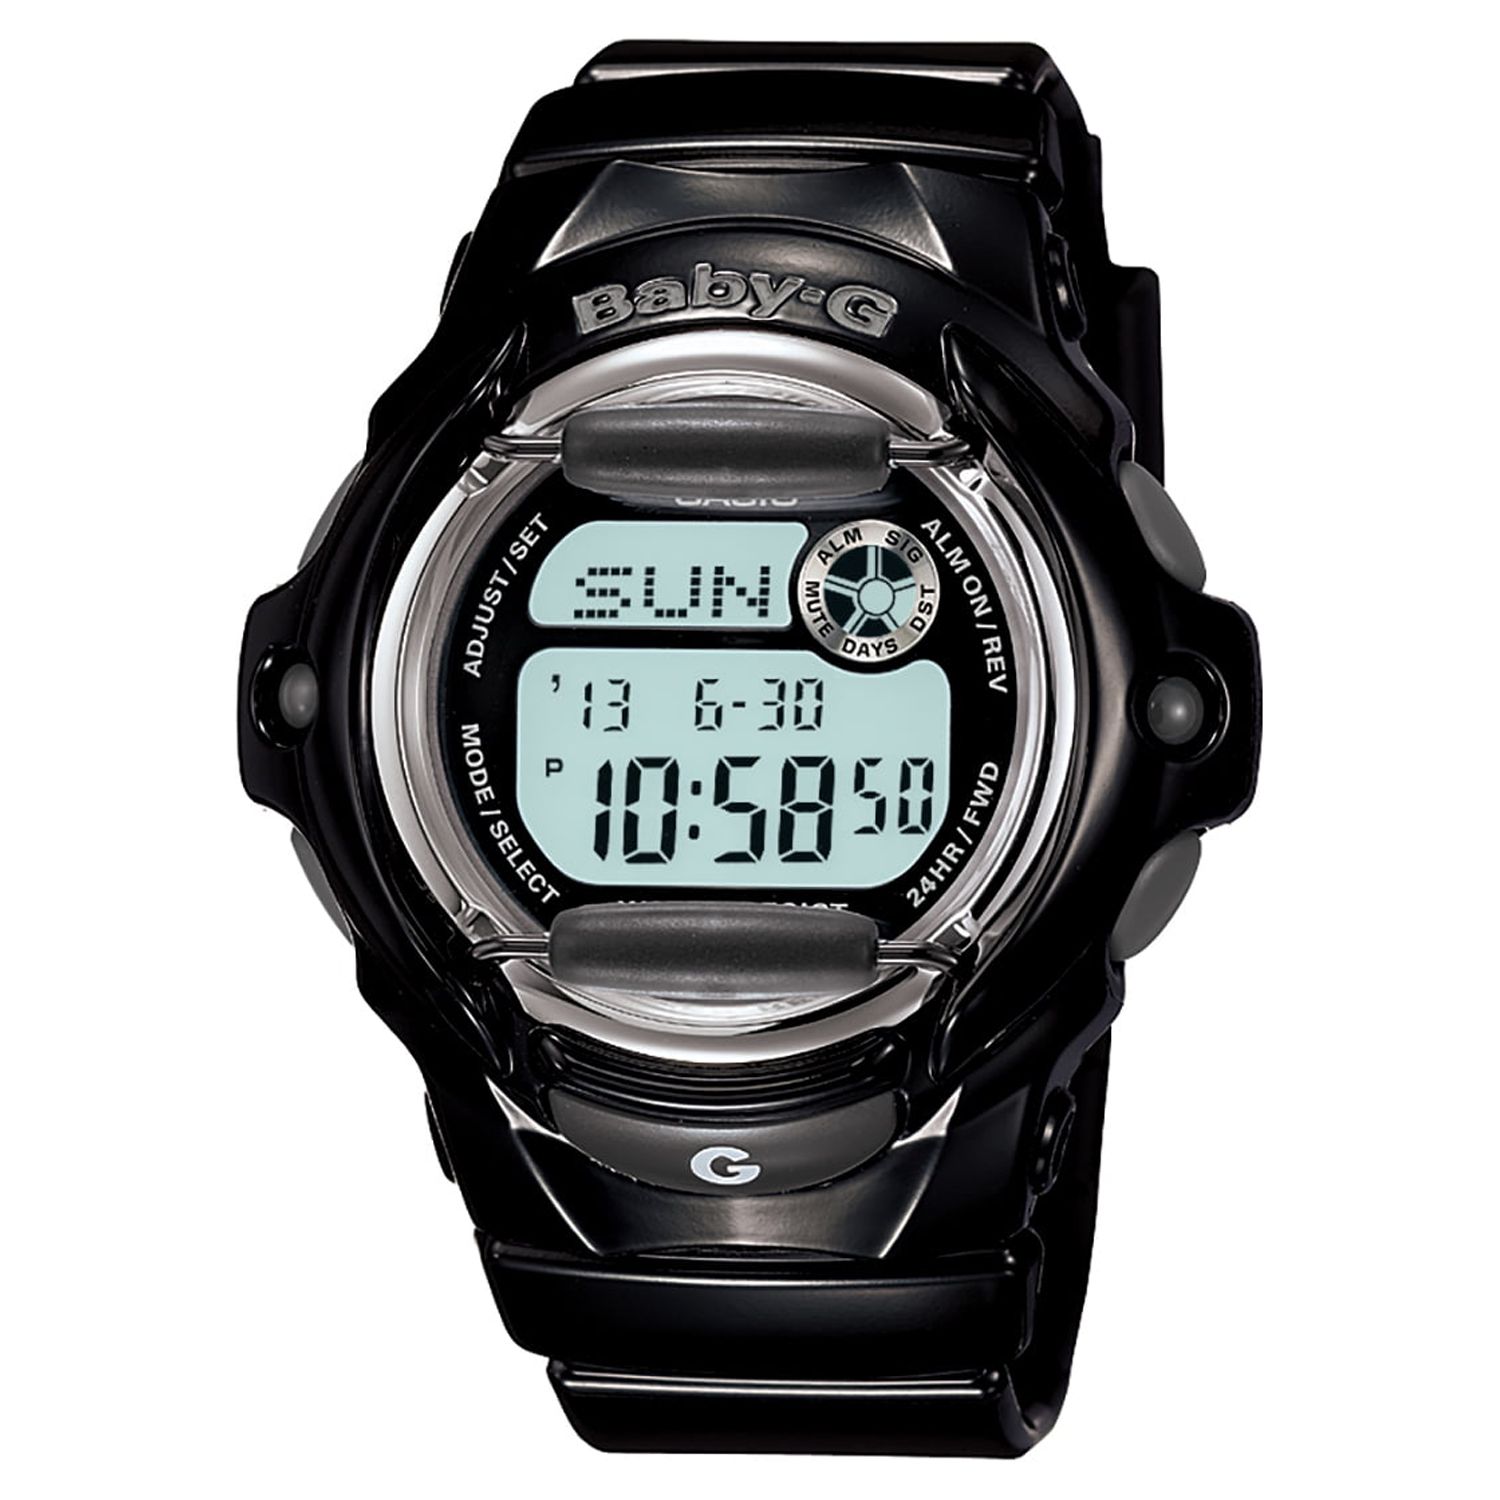 Casio Baby-G Black Digital Watch BG169R-1M - image 1 of 3